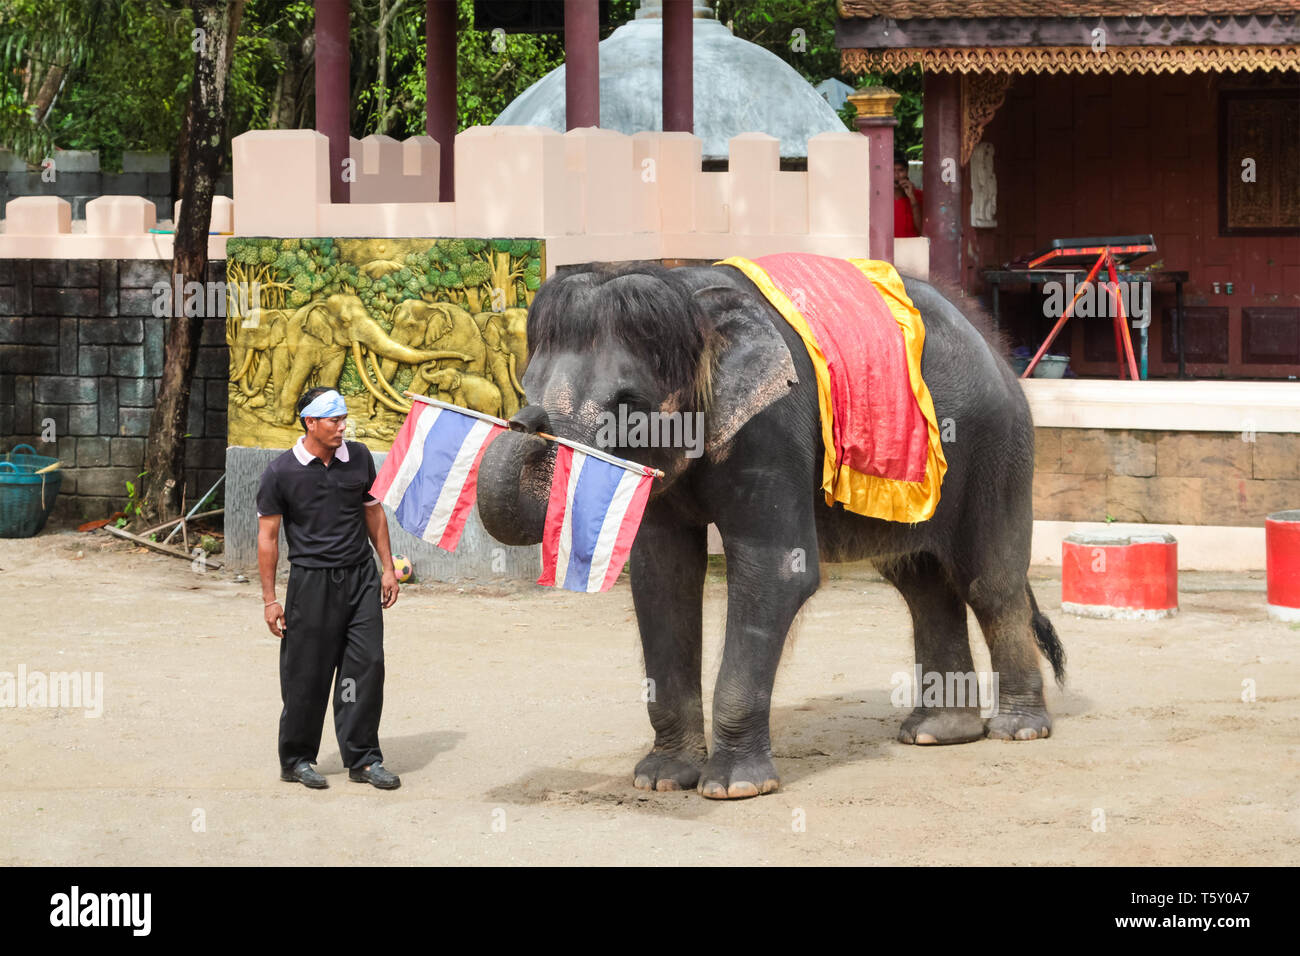 PHUKET, Tailandia - Diciembre 11, 2010: show de elefantes en el zoo de la isla de Phuket en Tailandia Foto de stock